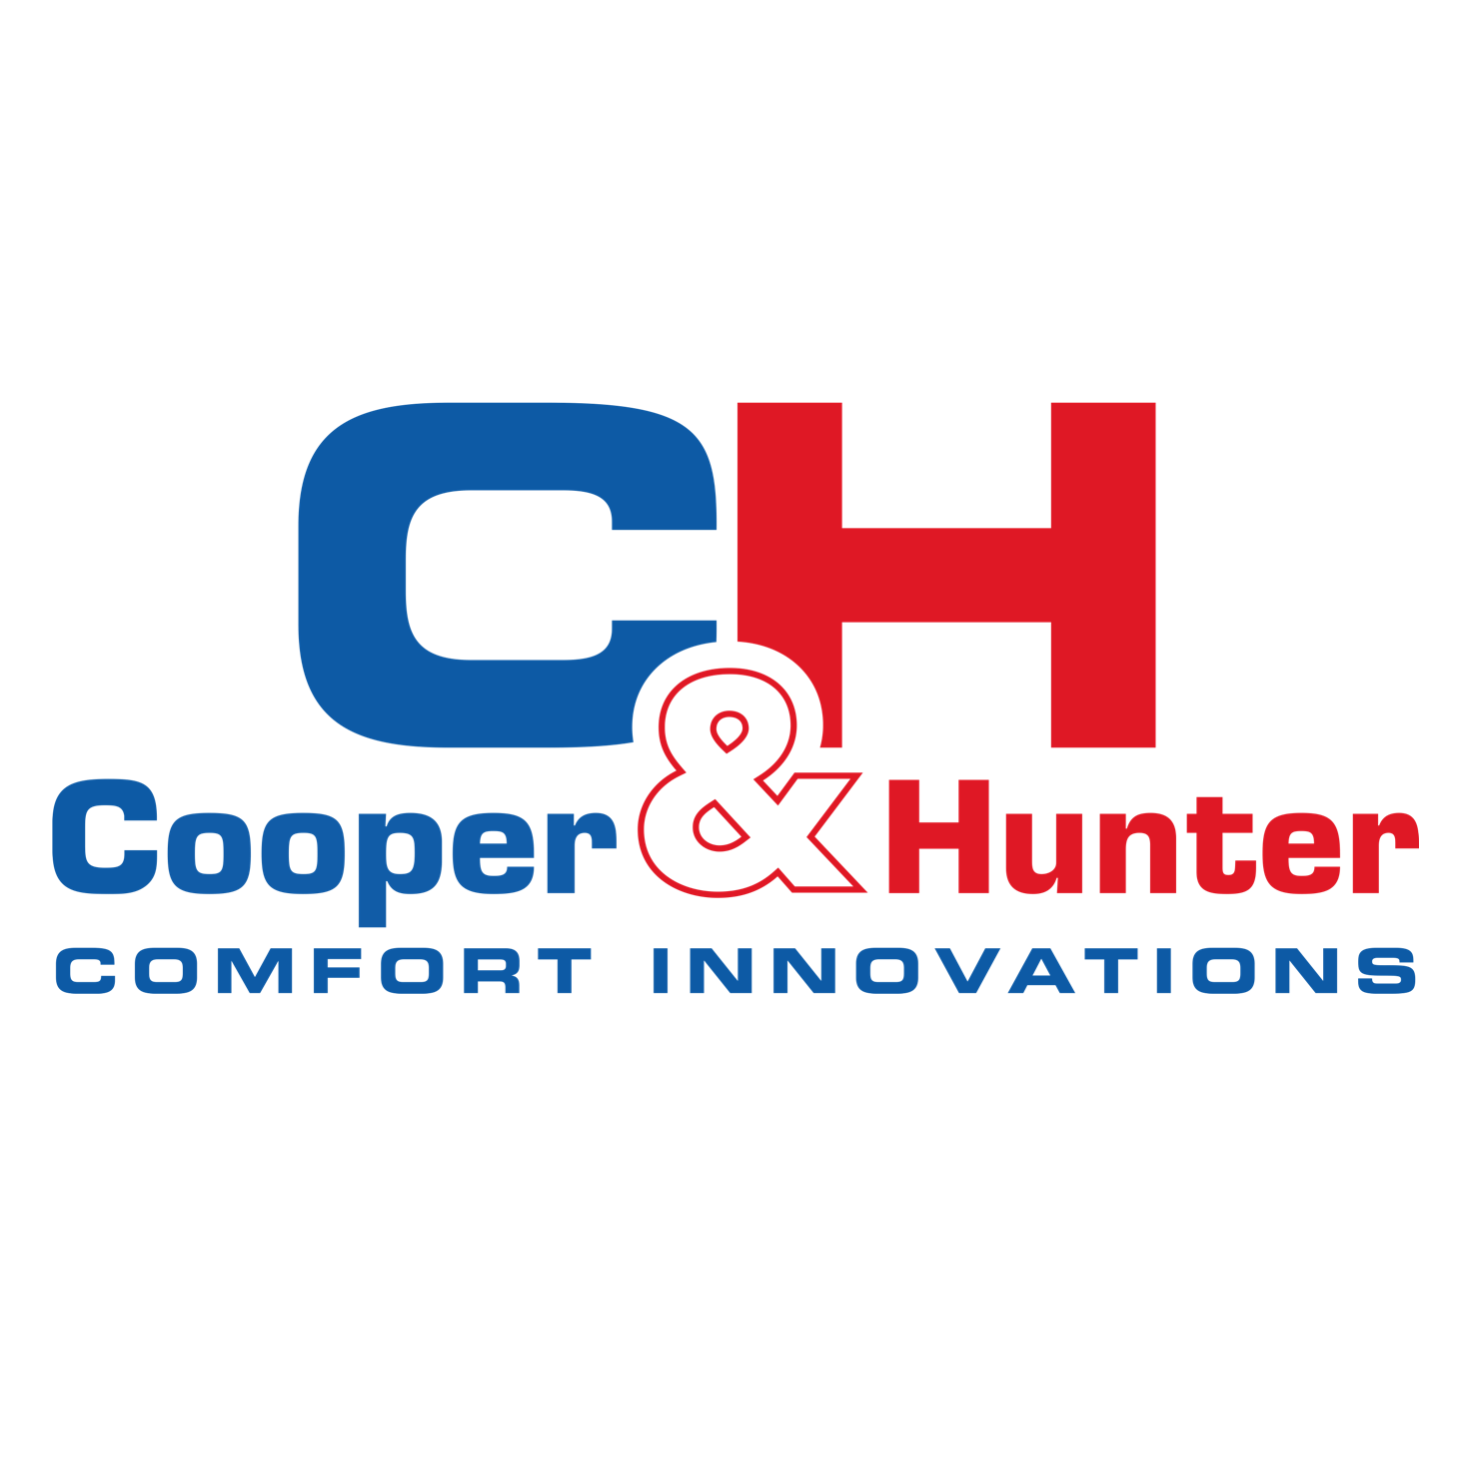 Cooper & Hunter